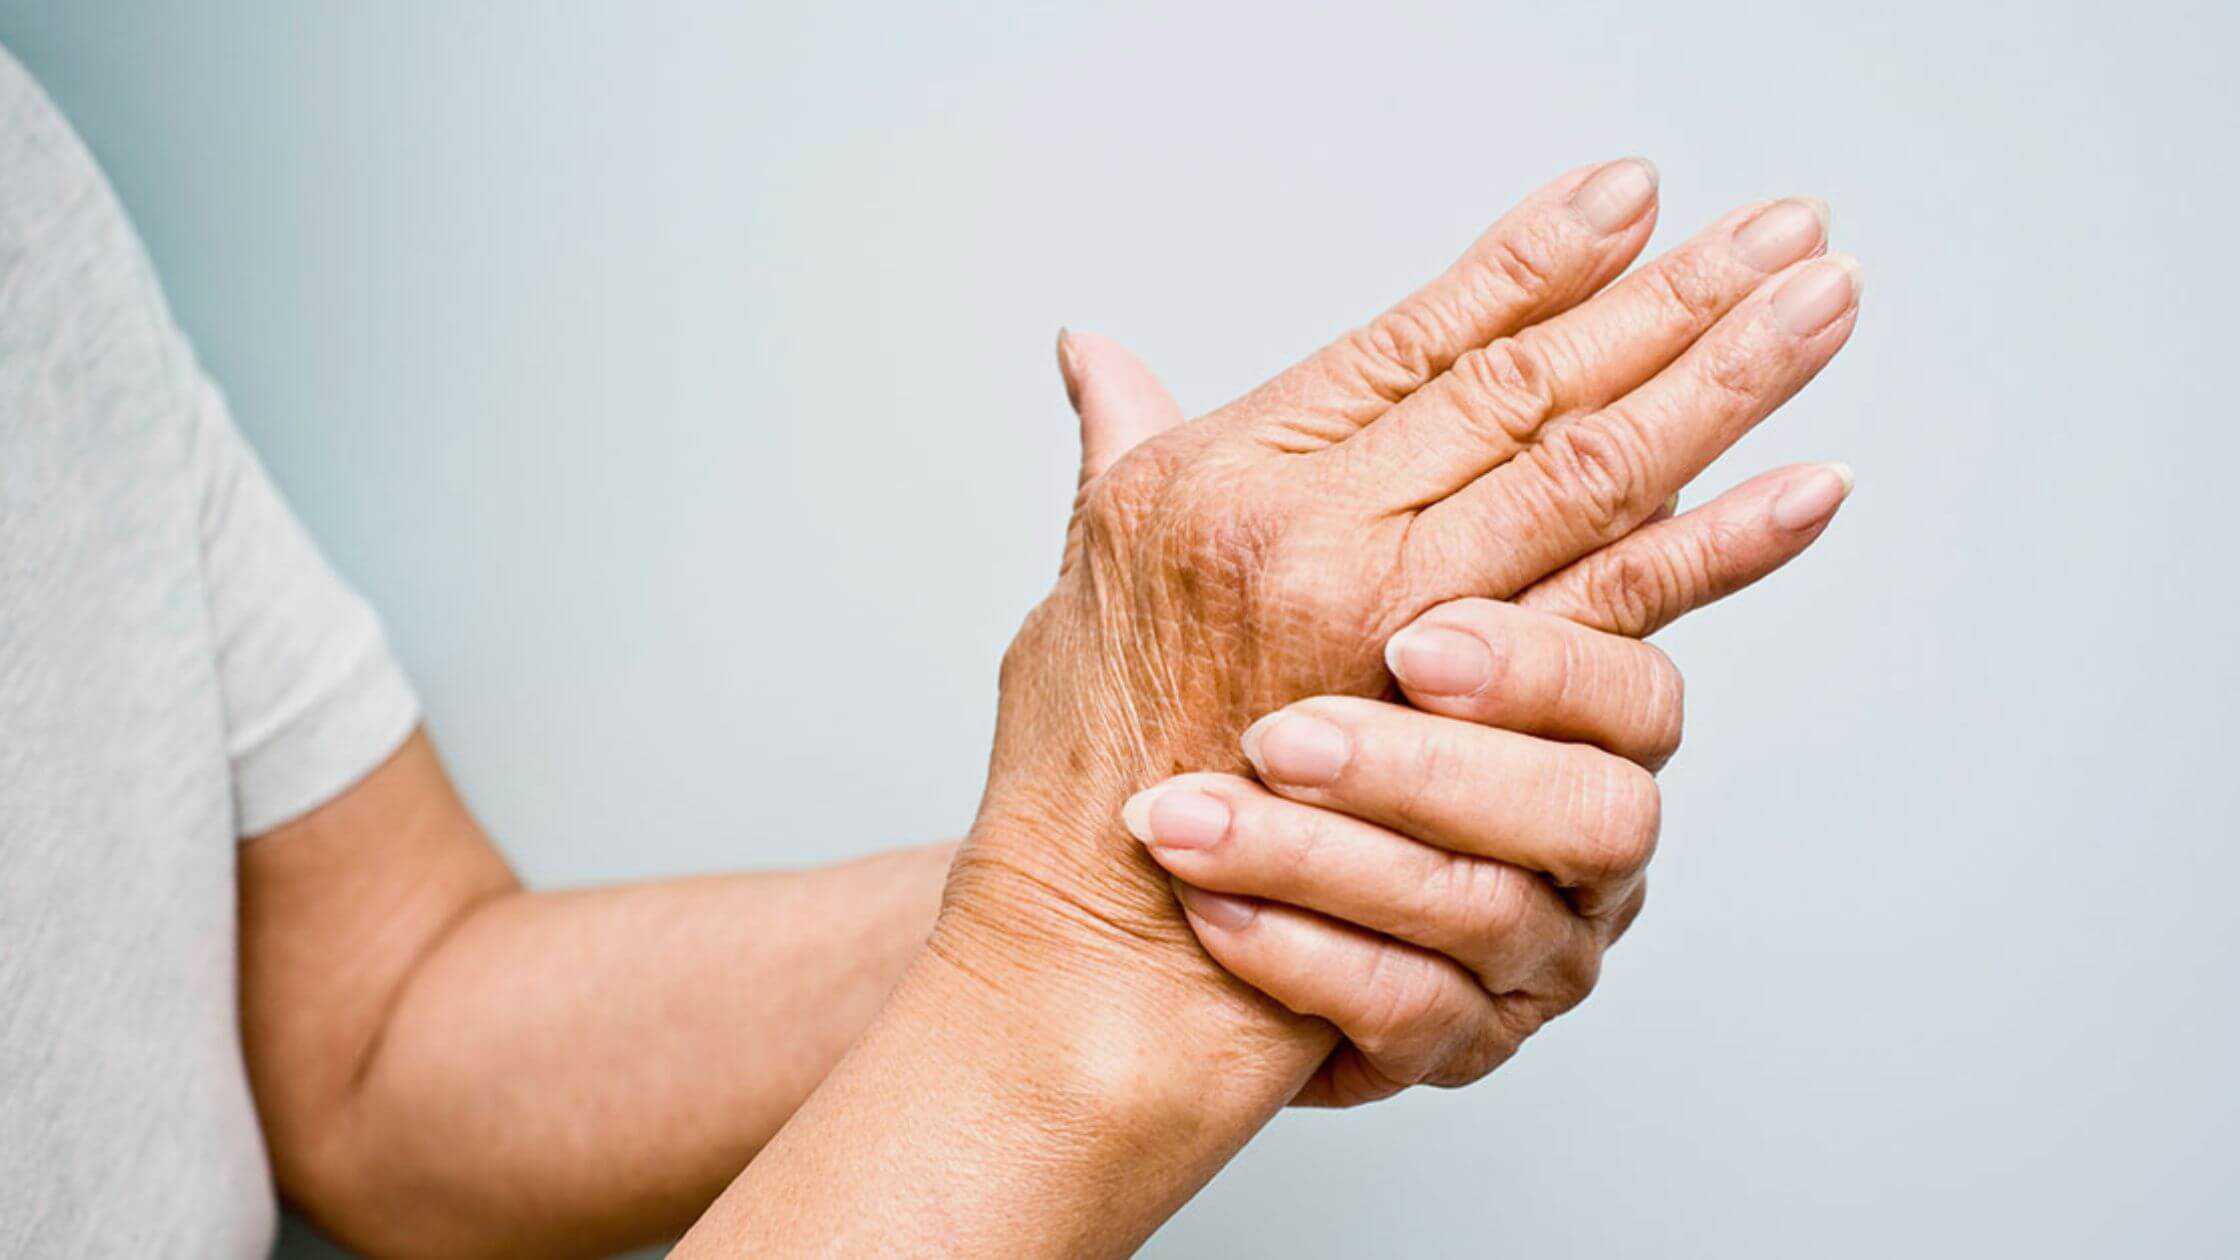 Identifying The Protein Responsible For Rheumatoid Arthritis Damage